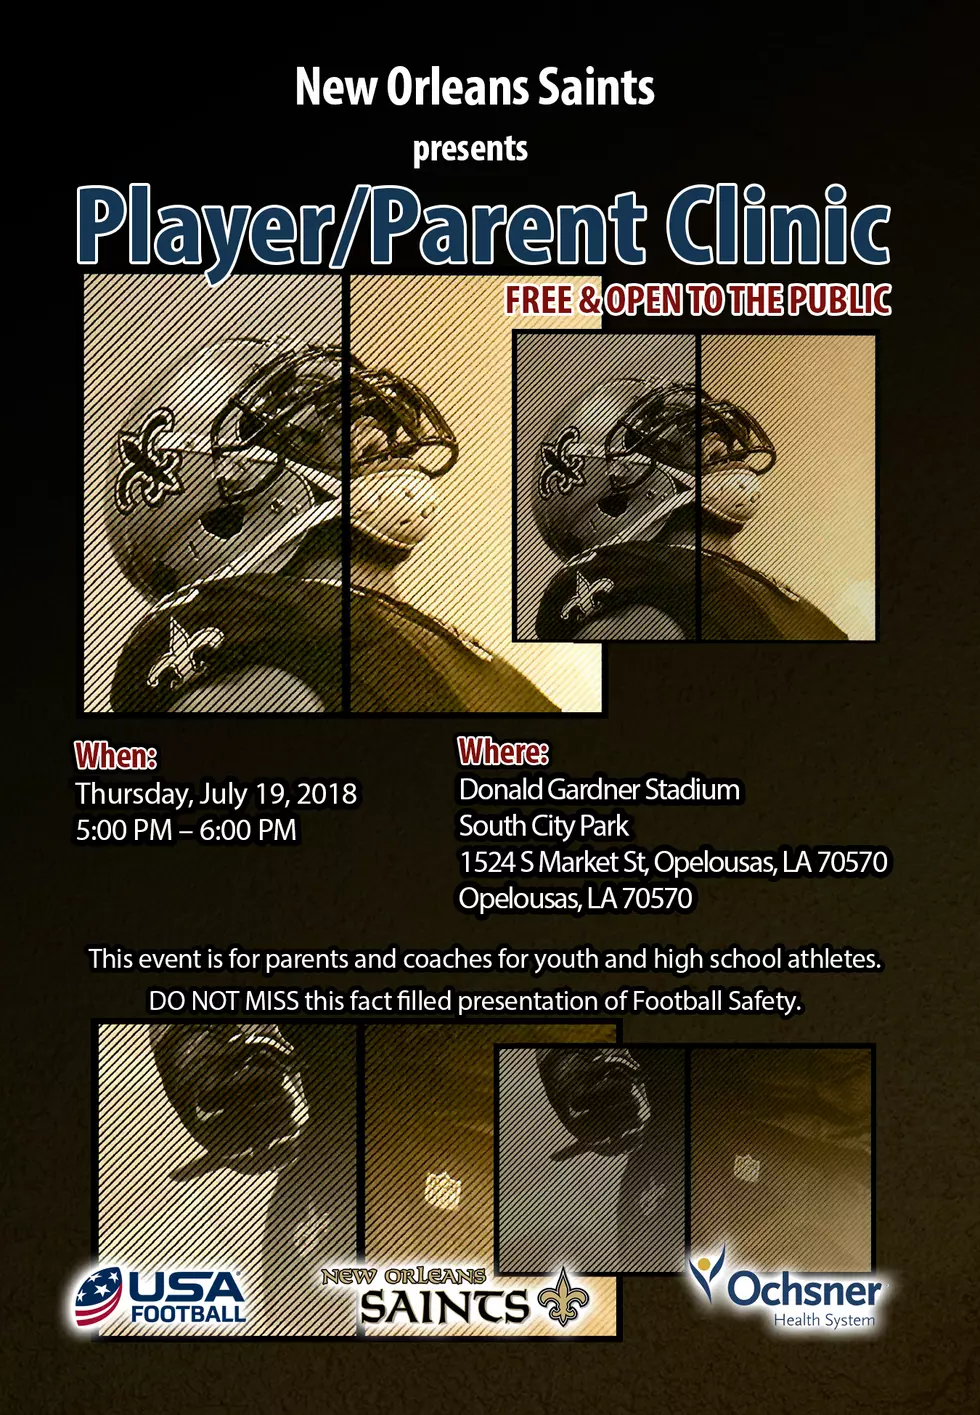 New Orleans Saints + USA Football Present Player Parent Clinic